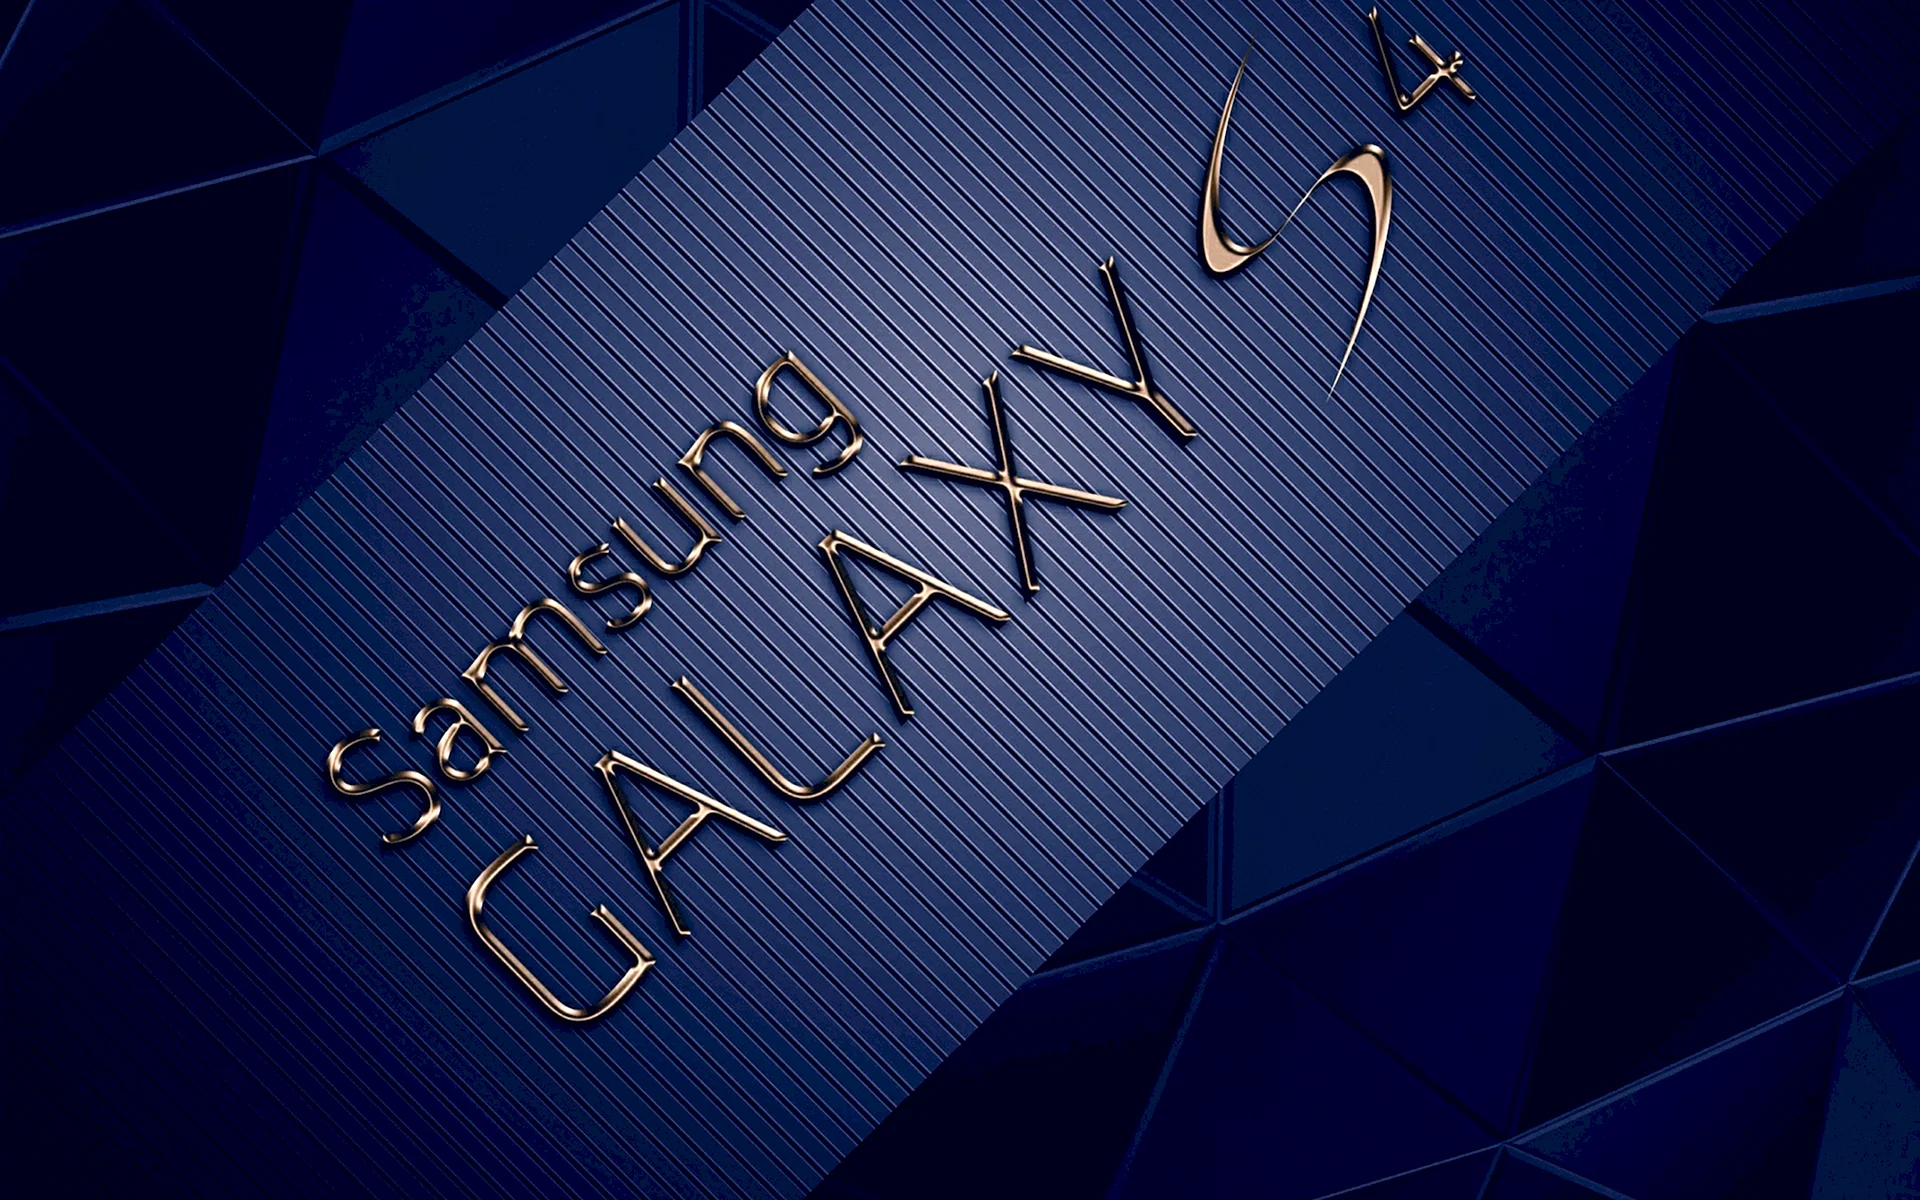 Galaxy S4 Wallpaper